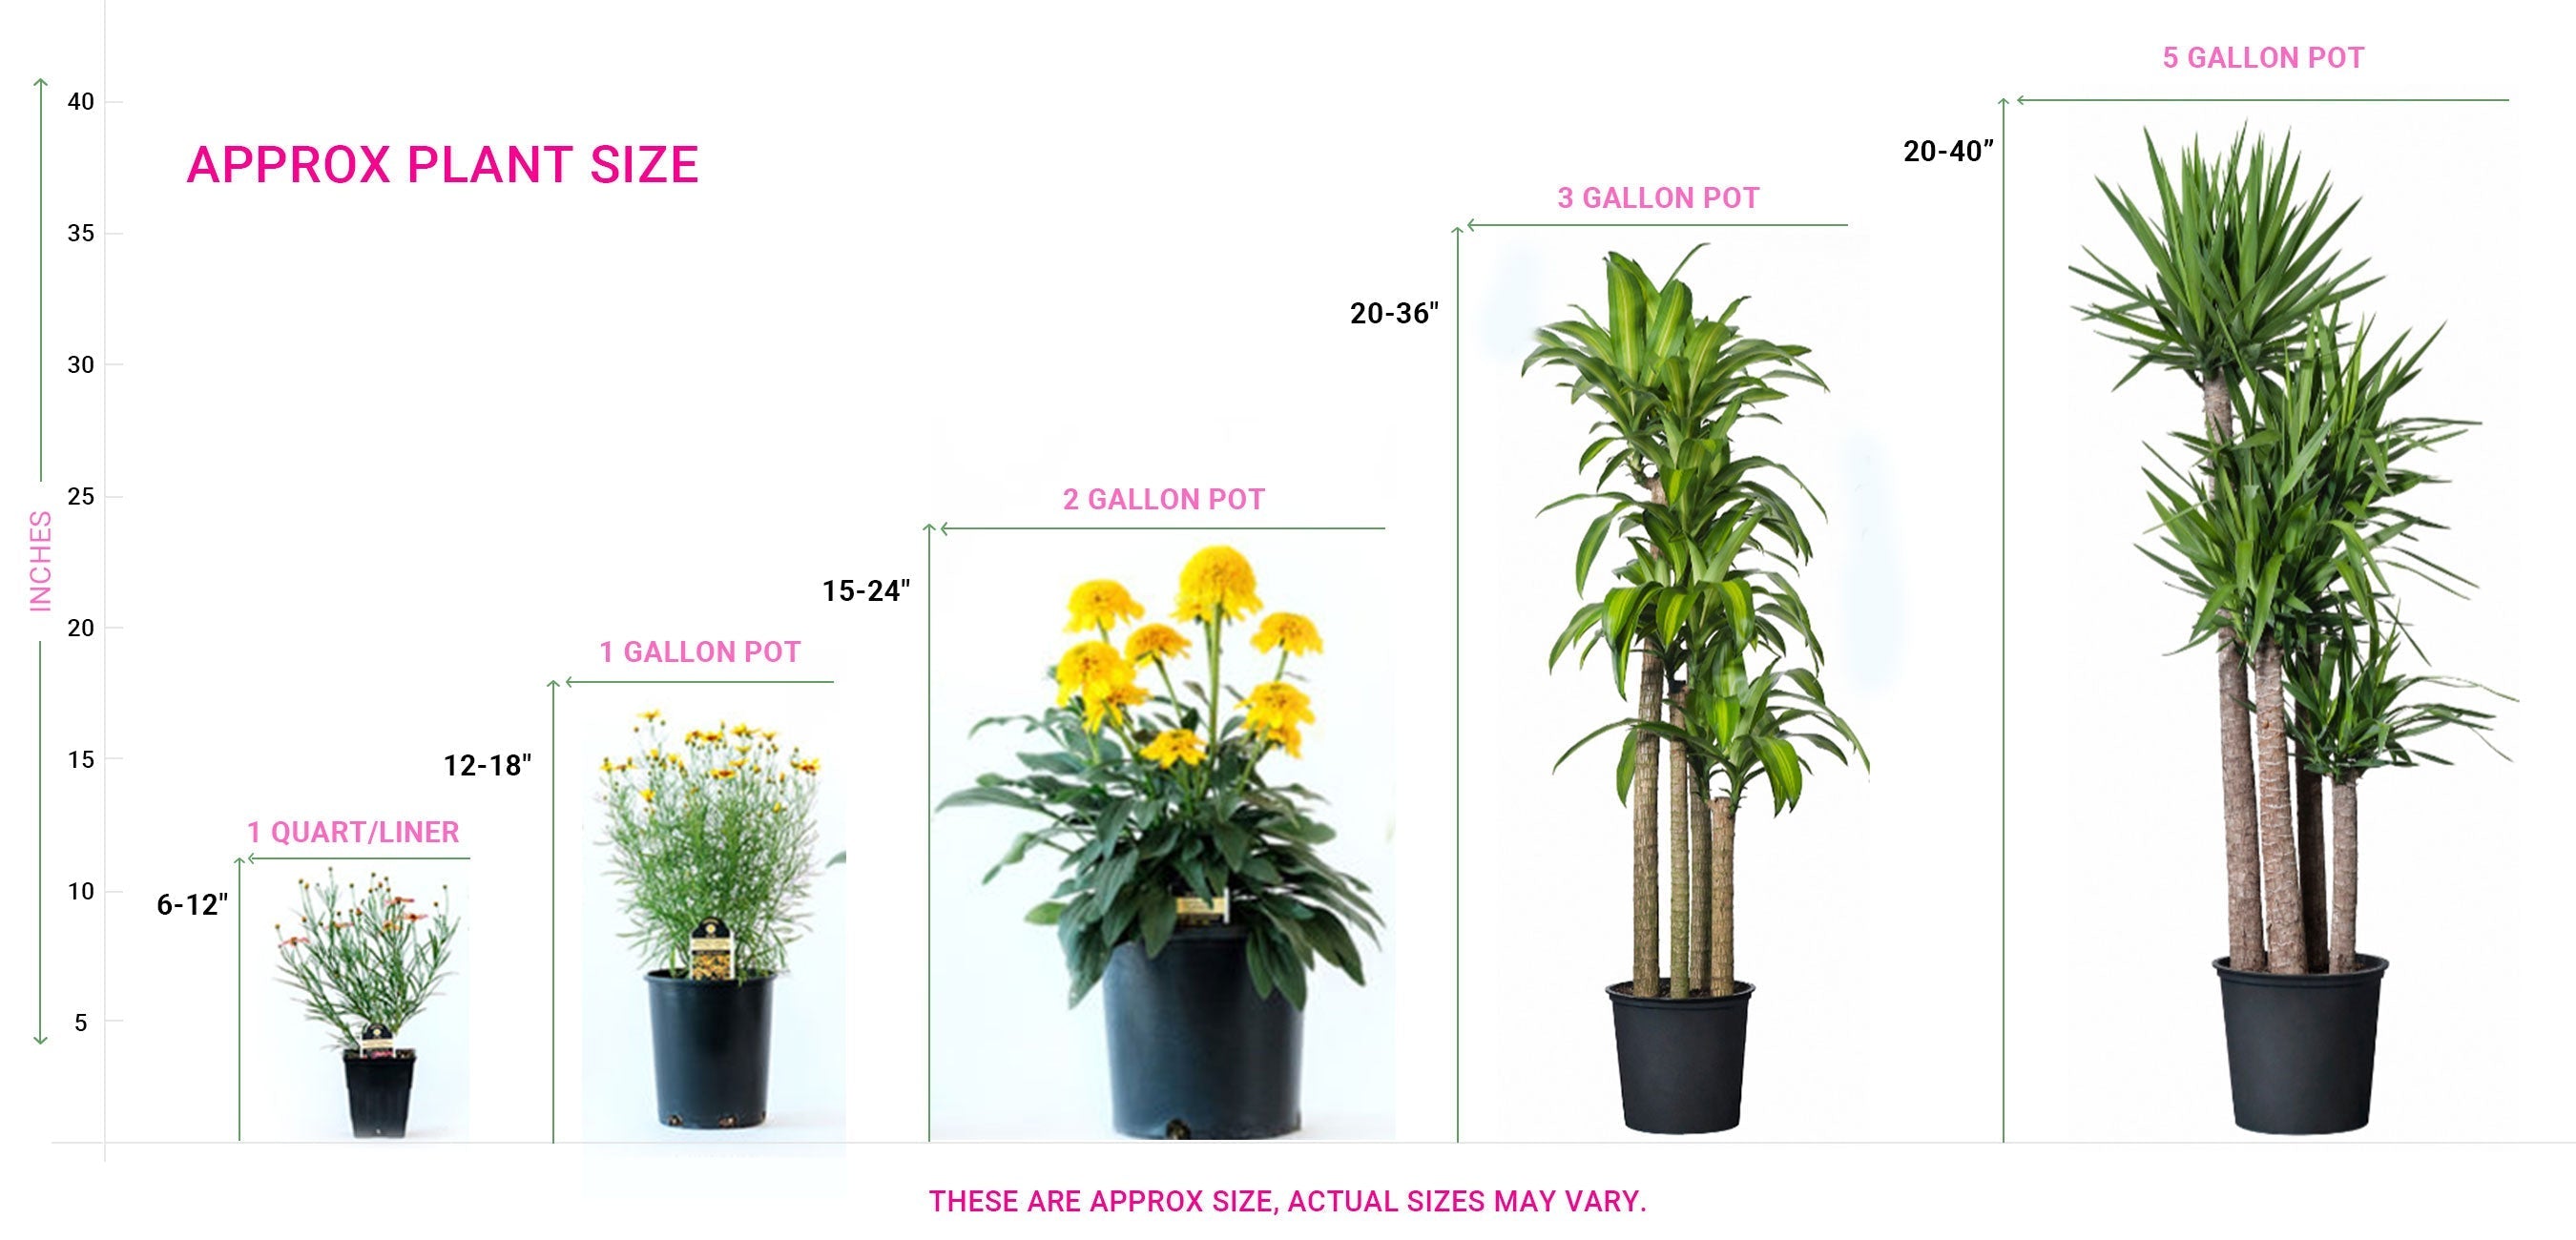 1 Gallon Pot: Leucanthemum Superbum Amazing Daisies Daisy May &